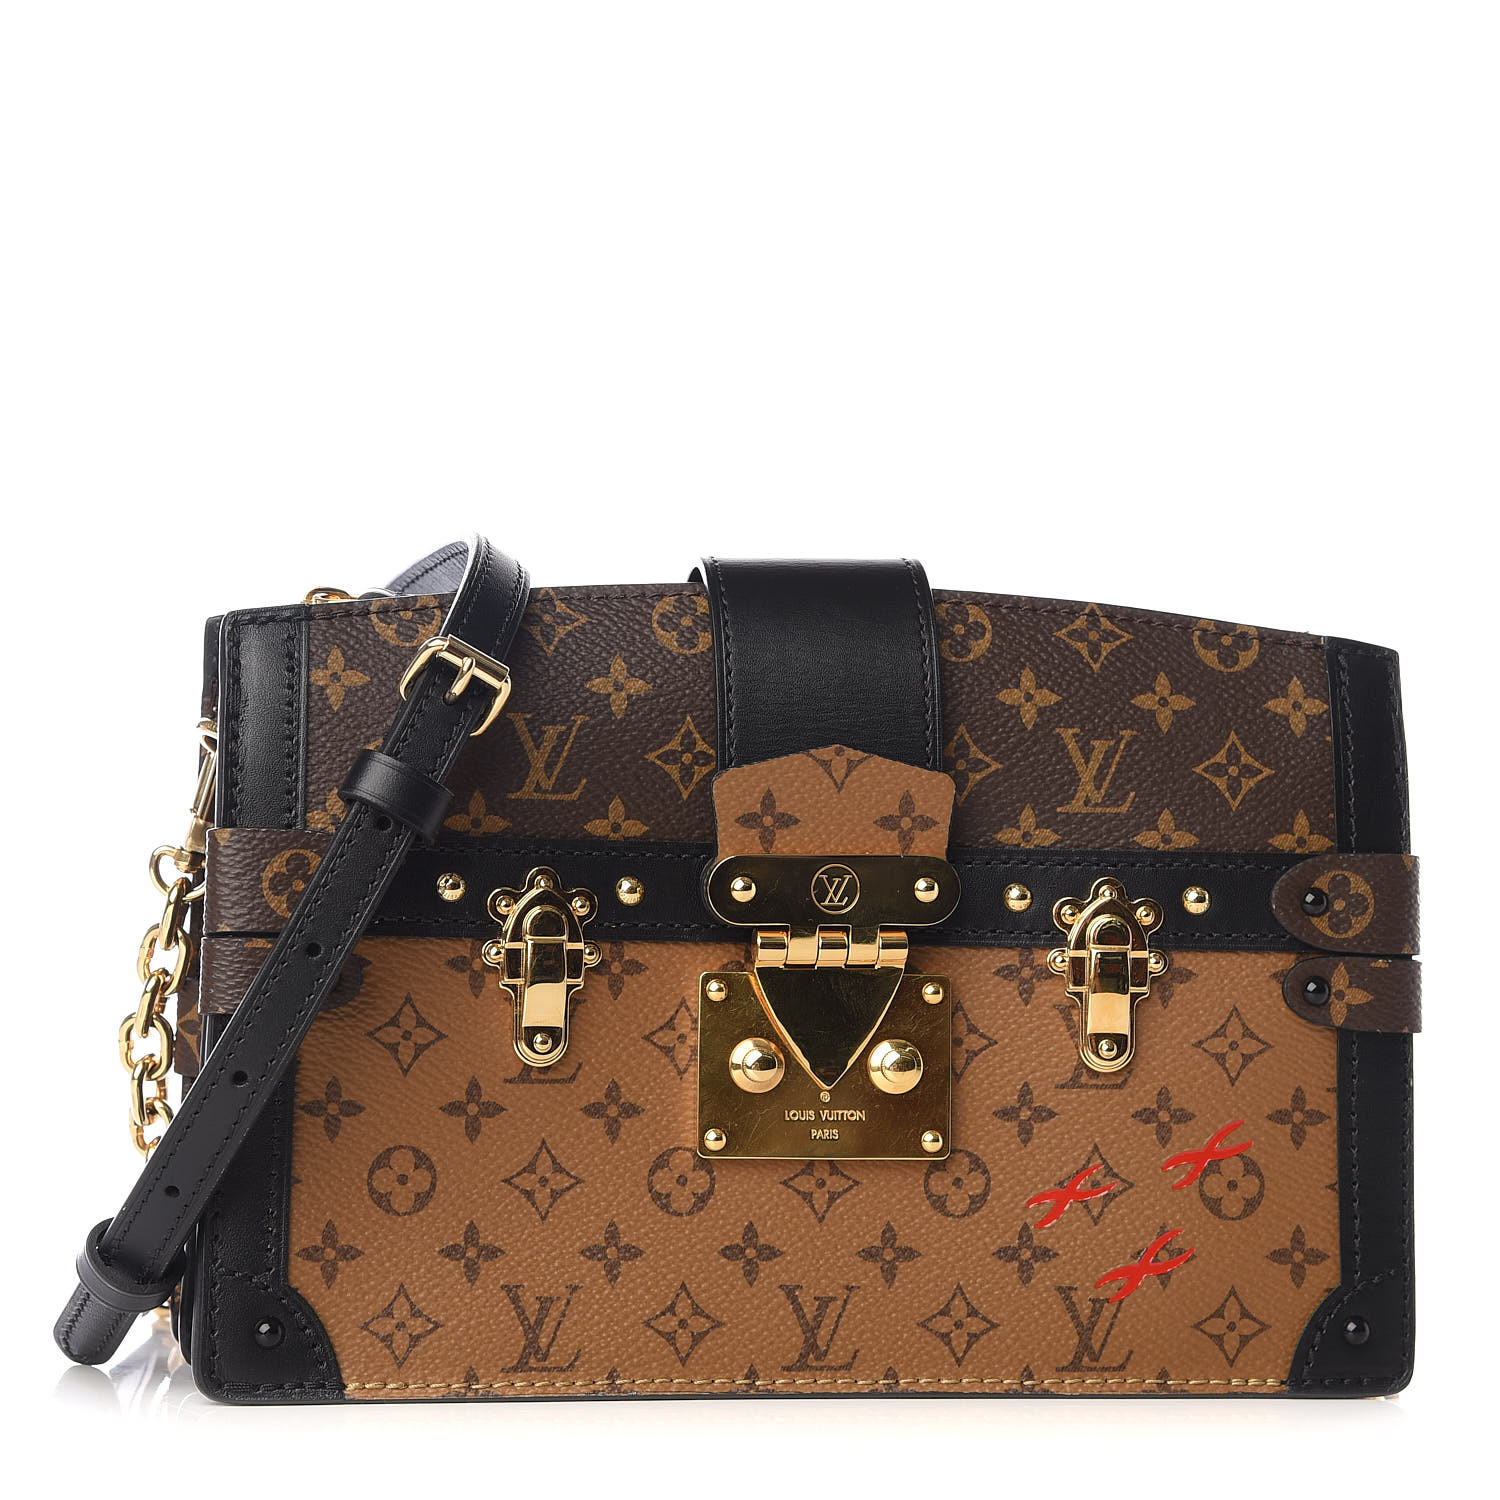 DHgate Dupe Louis Vuitton Style Brown Monogram Trunk Bag w/ Studs